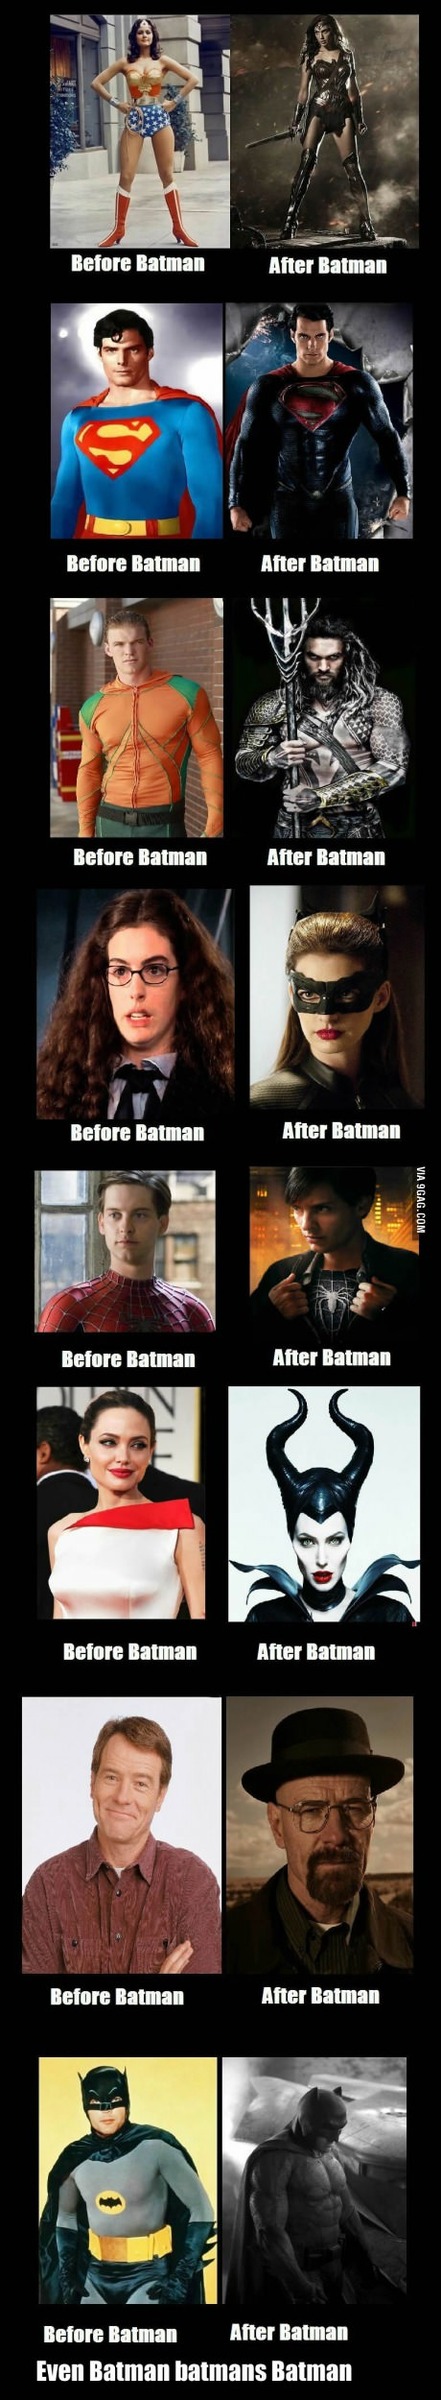 Things before Batman and thanks after Batman - meme